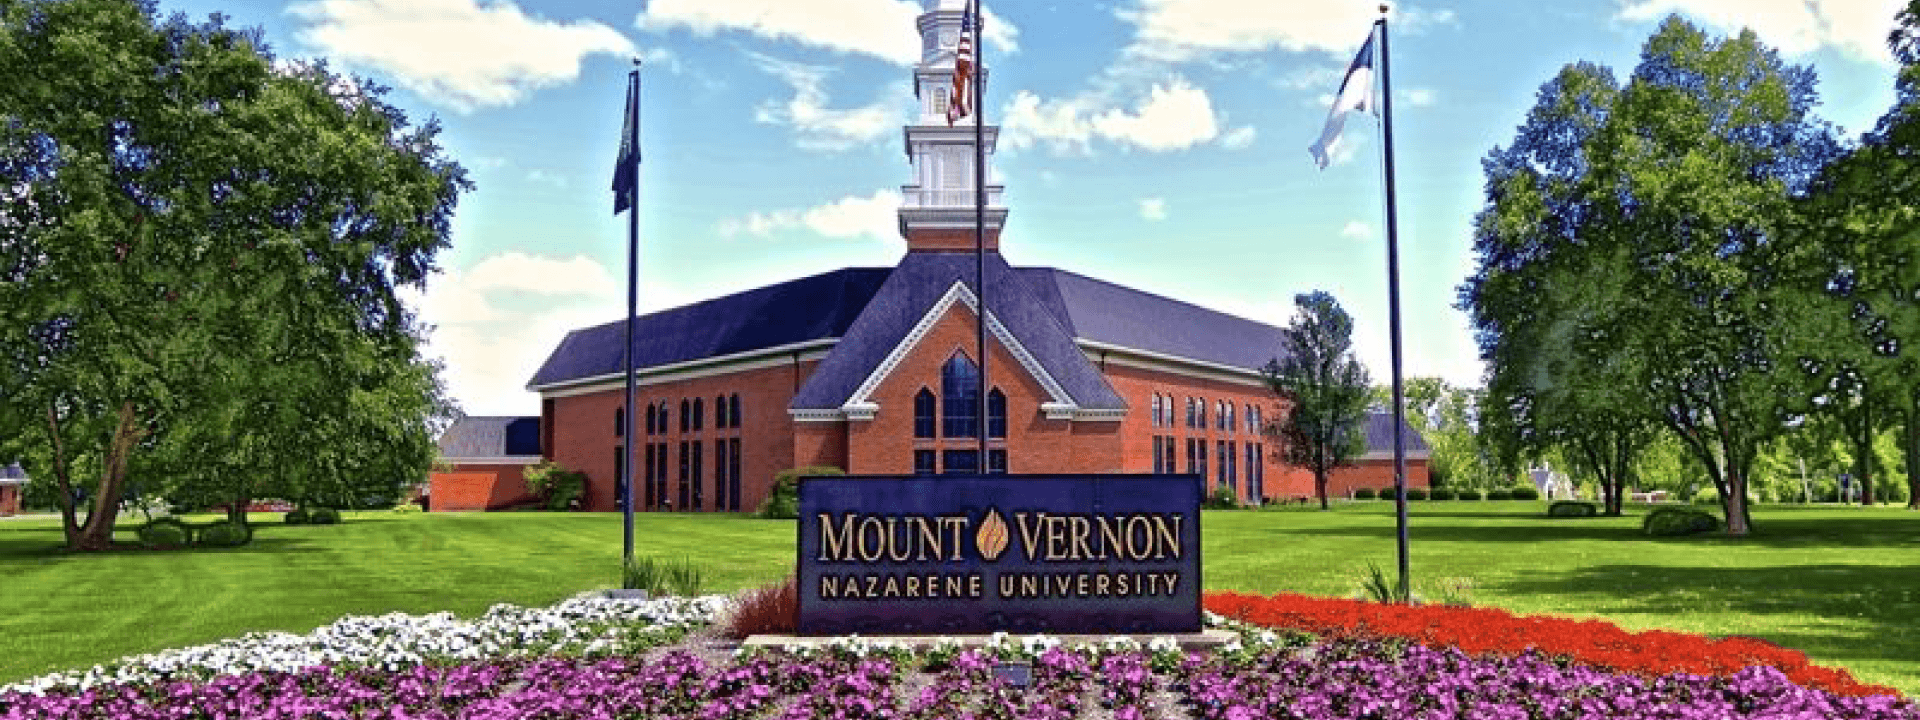 College and University Track & Field Teams Mount Vernon Nazarene